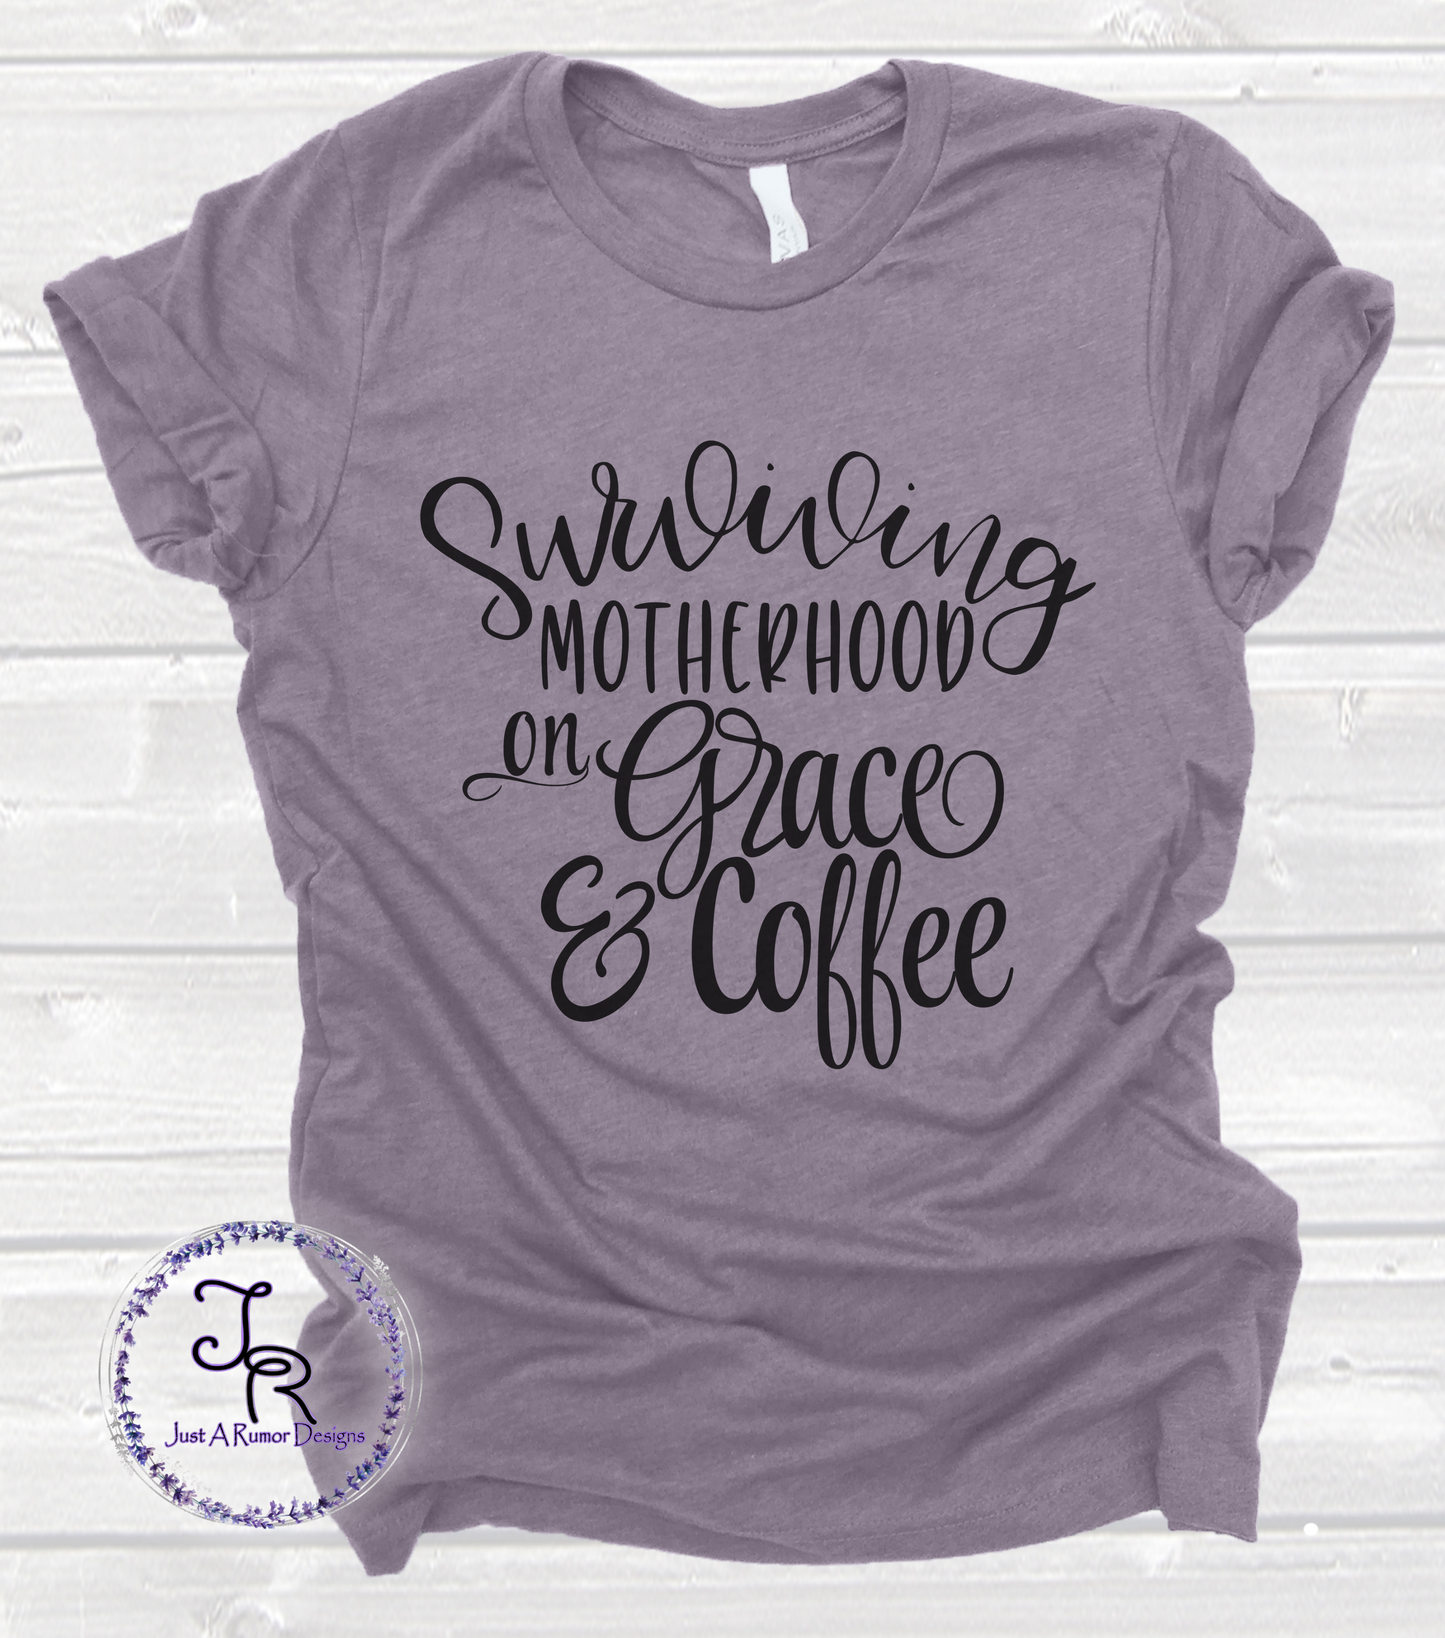 Grace & Coffee Shirt